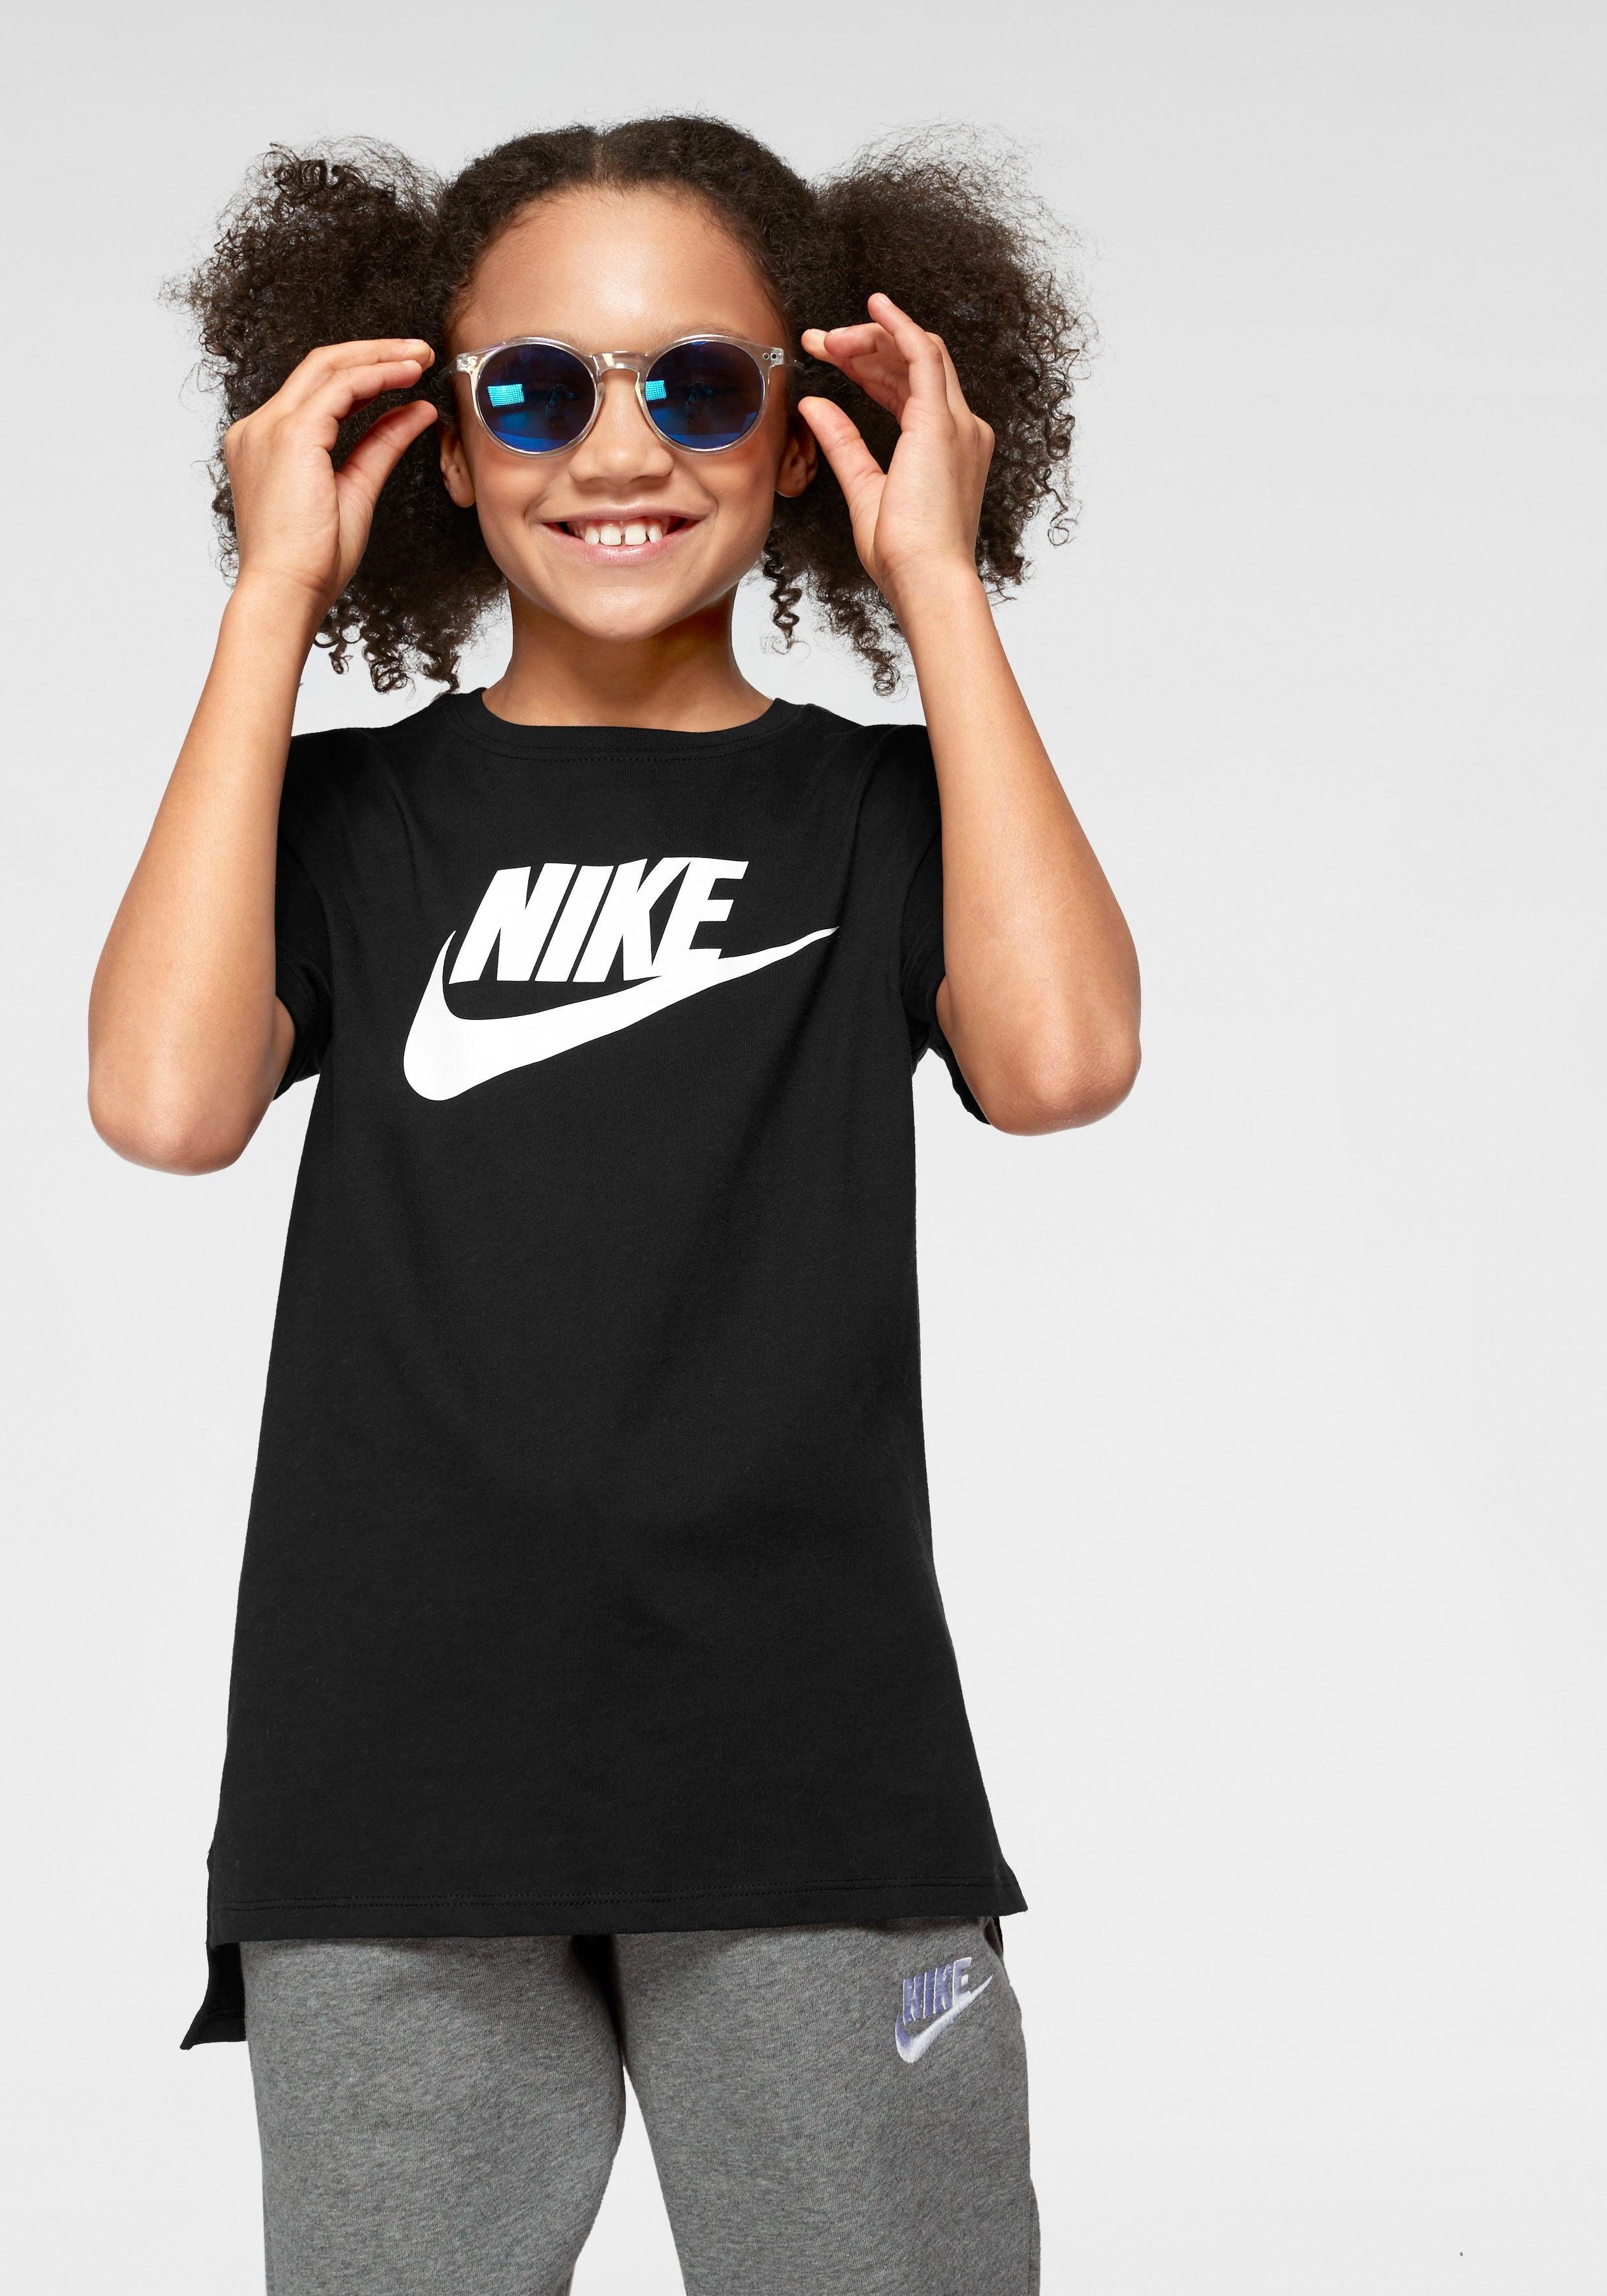 Nike Sportswear T-Shirt Kids' Big T-Shirt schwarz